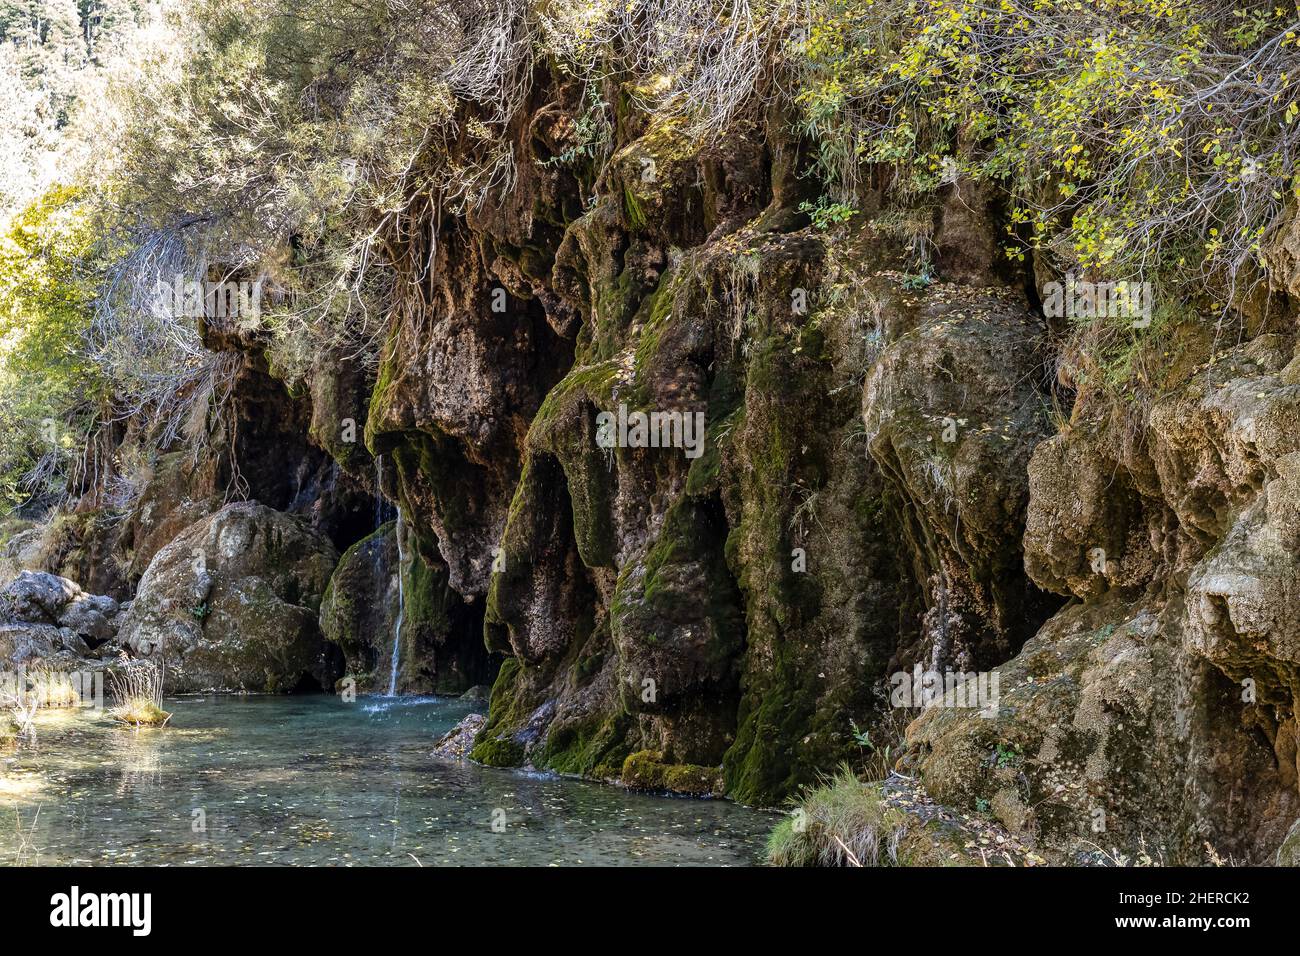 View of the source of the River Cuervo, Nacimiento del rio Cuervo, Serrania de Cuenca Natural Park, Spain Stock Photo